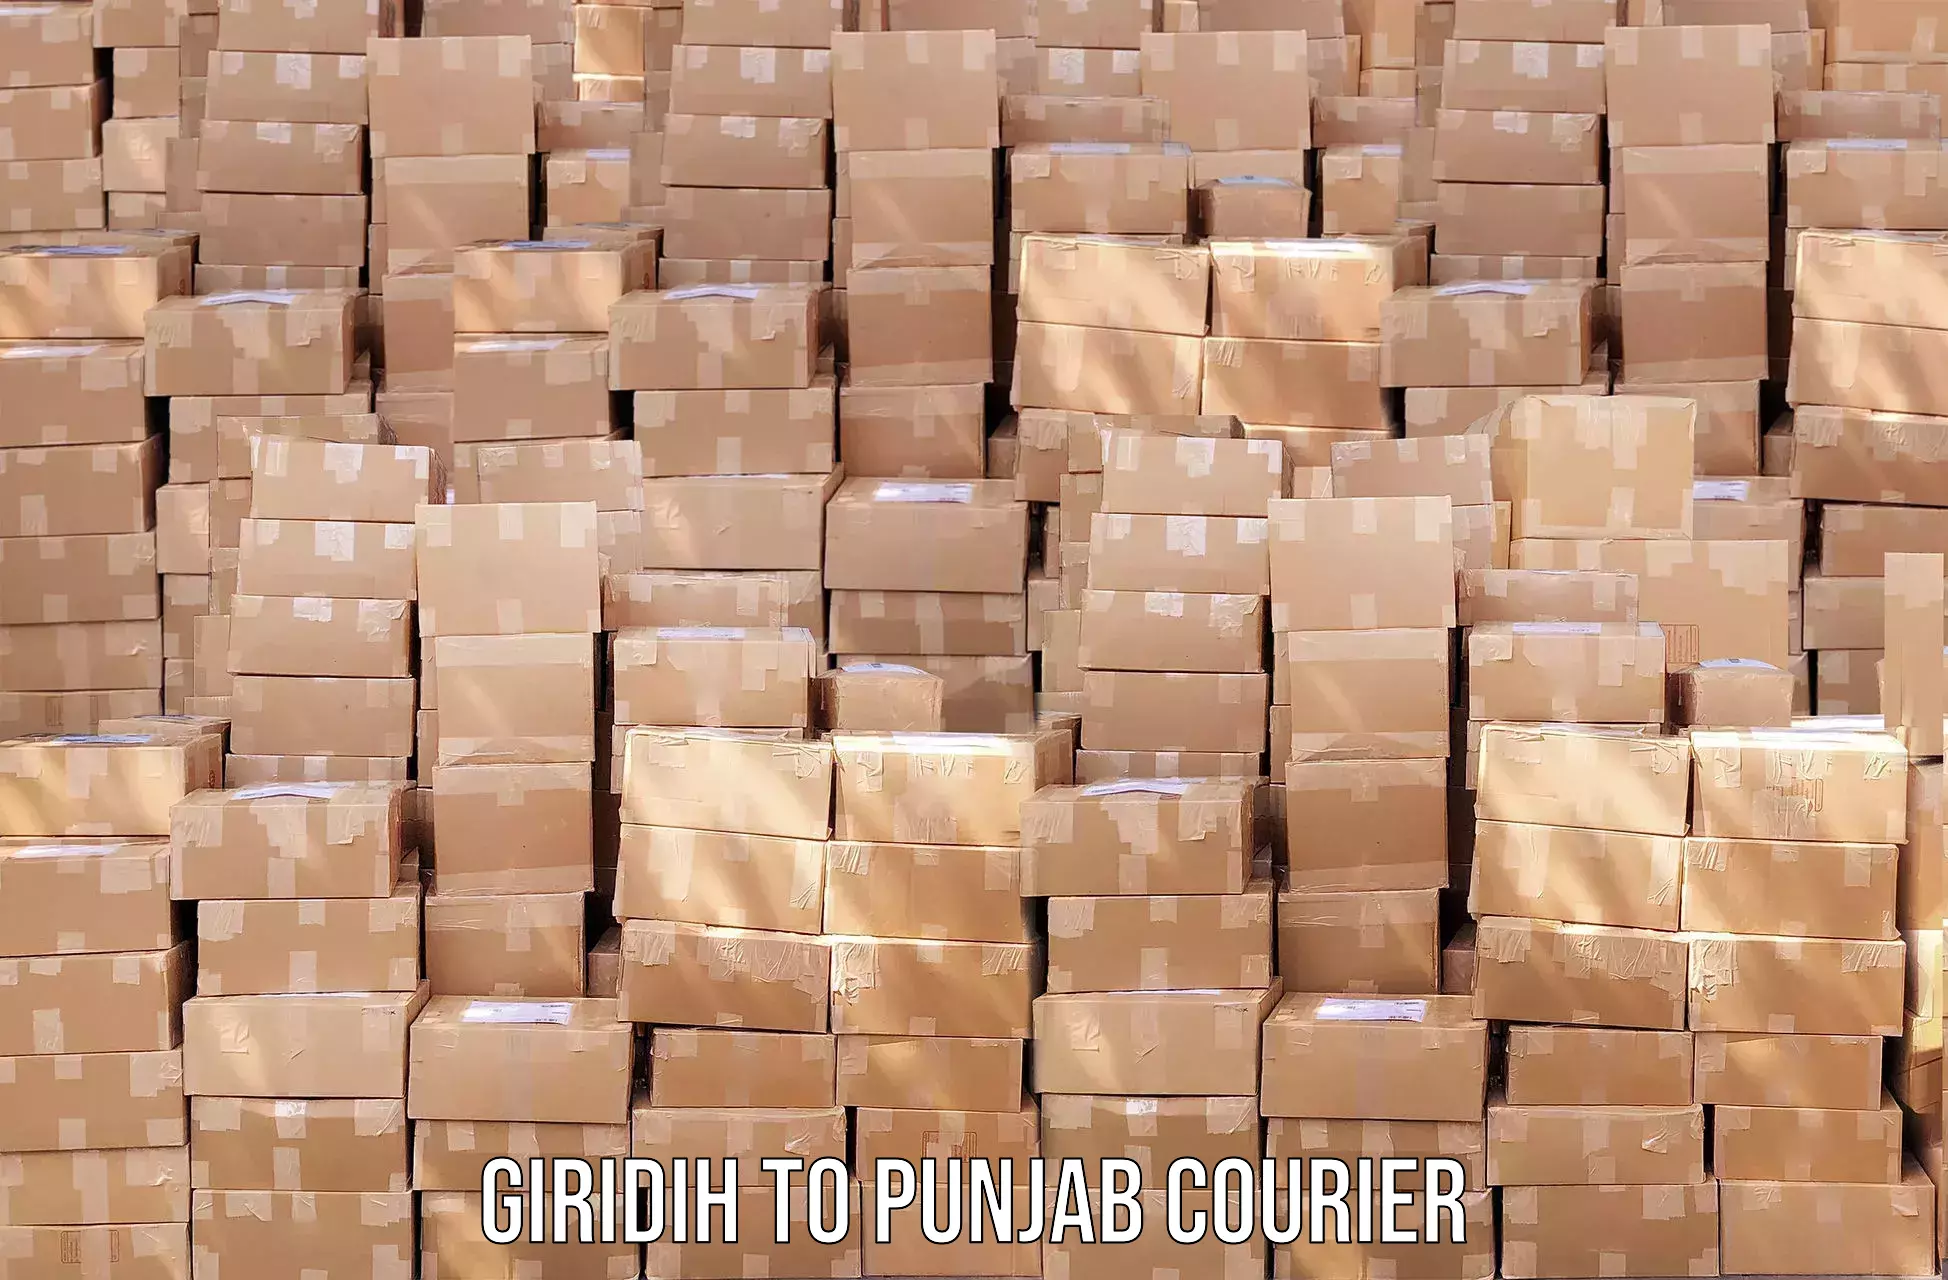 Courier service comparison Giridih to Khanna